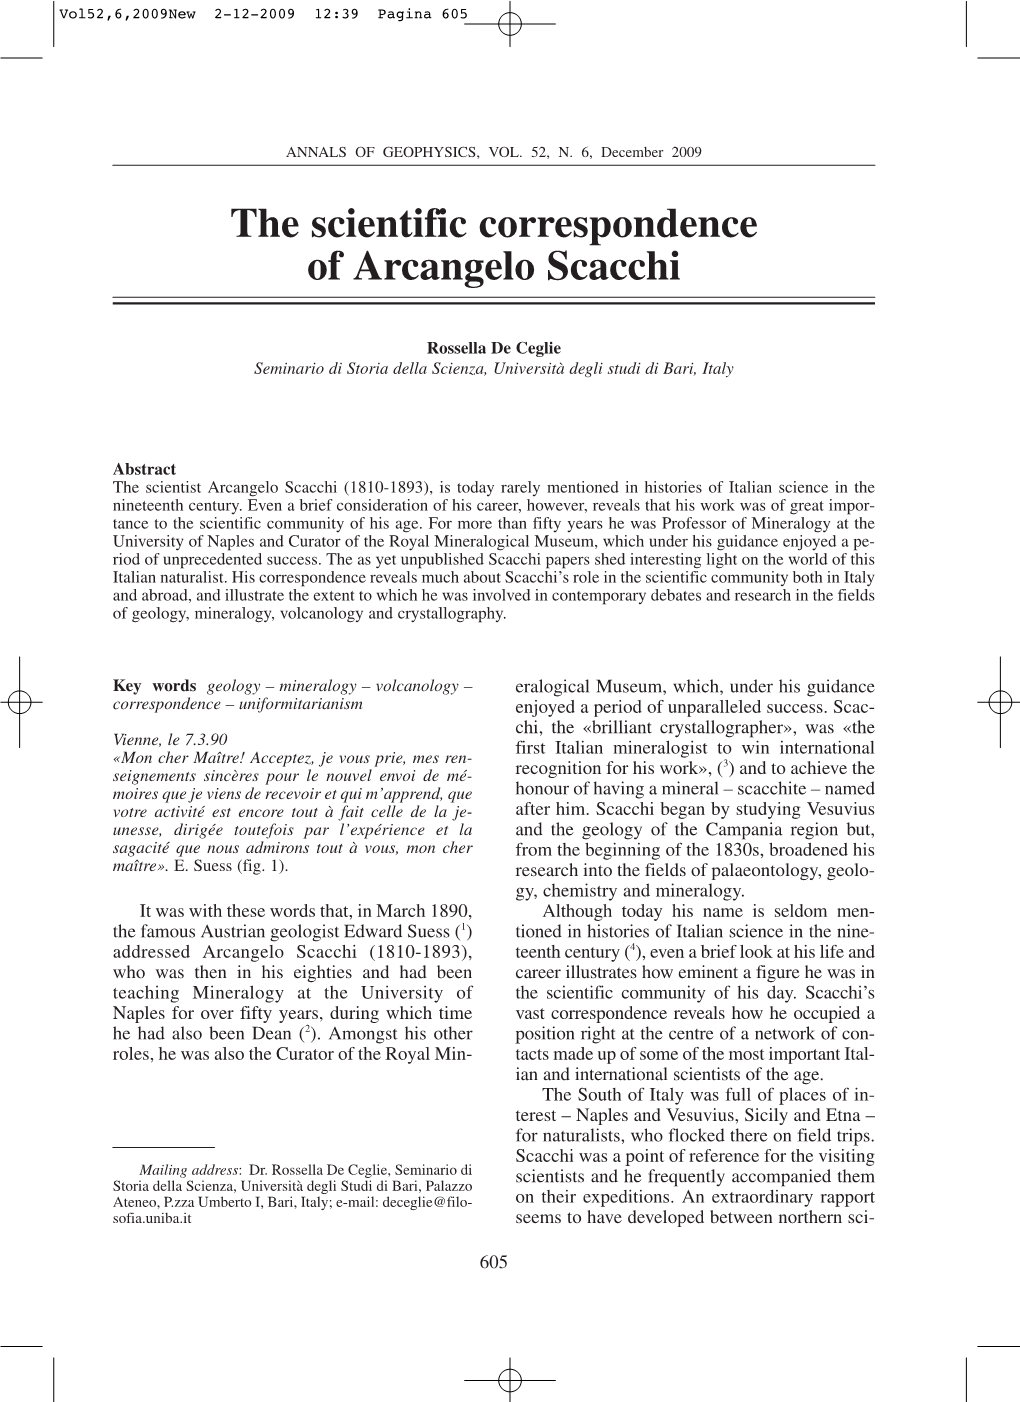 The Scientific Correspondence of Arcangelo Scacchi